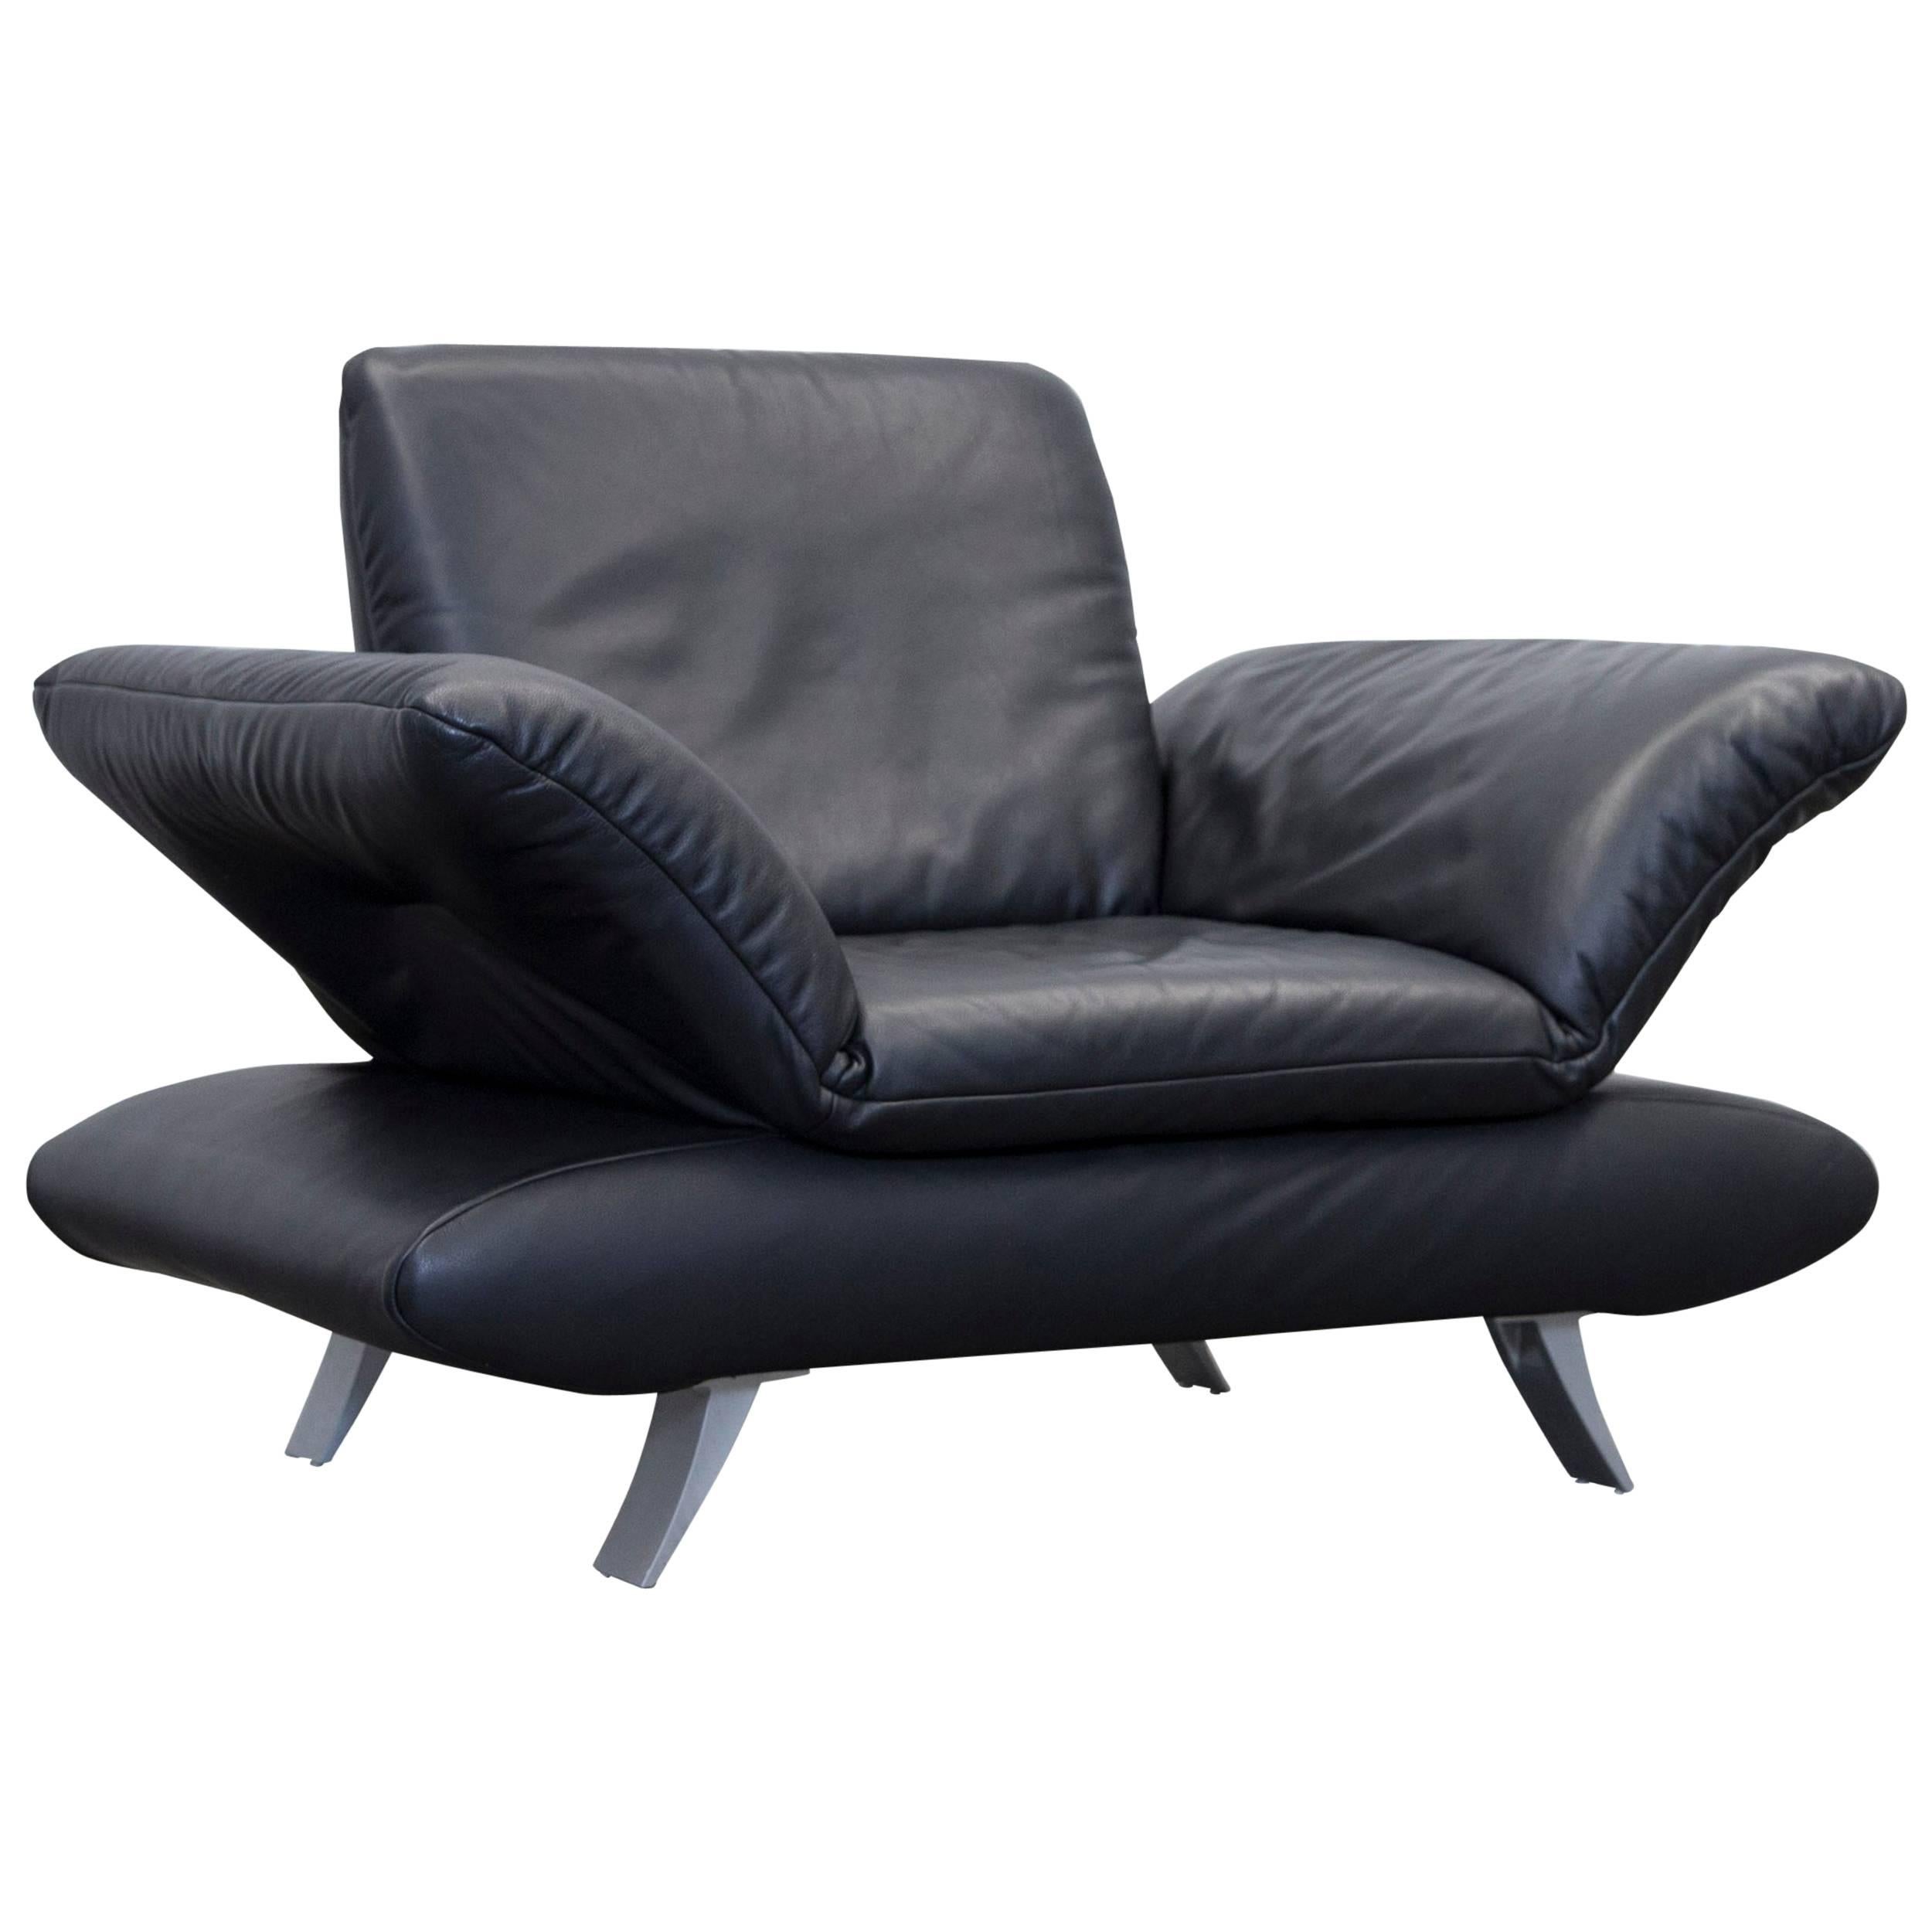 Koinor Rossini Designer Leather Armchair & Footstool Set Black Leather Function